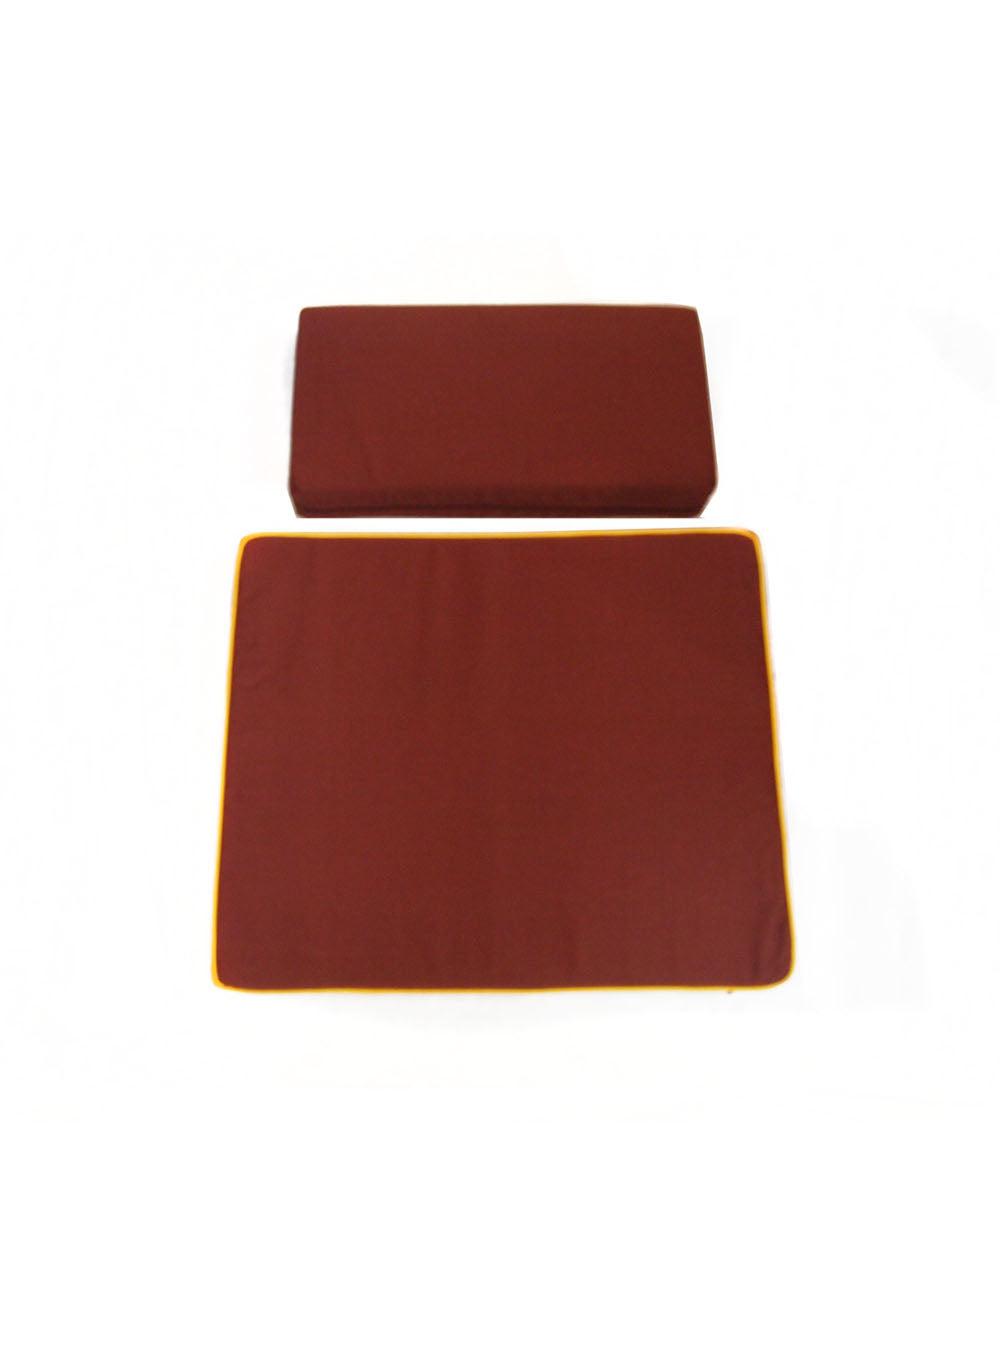 2-Pieces Medium Meditation Cushion in Reddish Brown